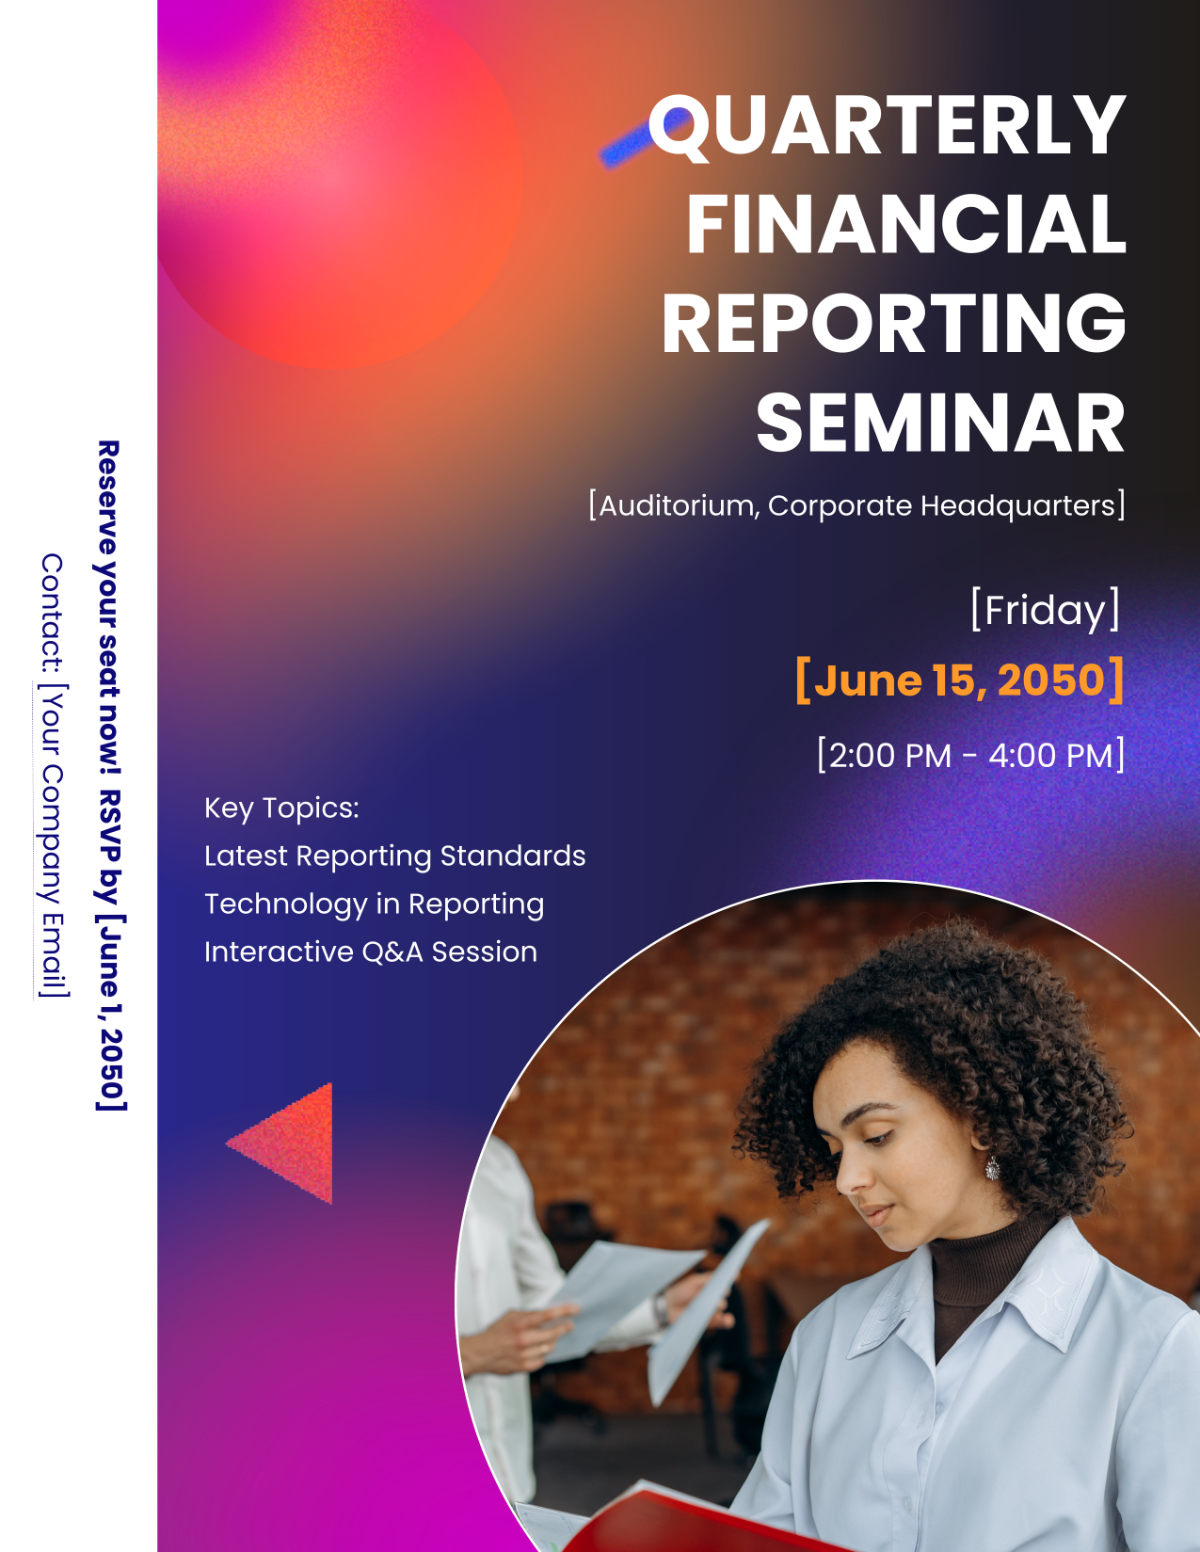 Quarterly Financial Reporting Seminar Flyer Template